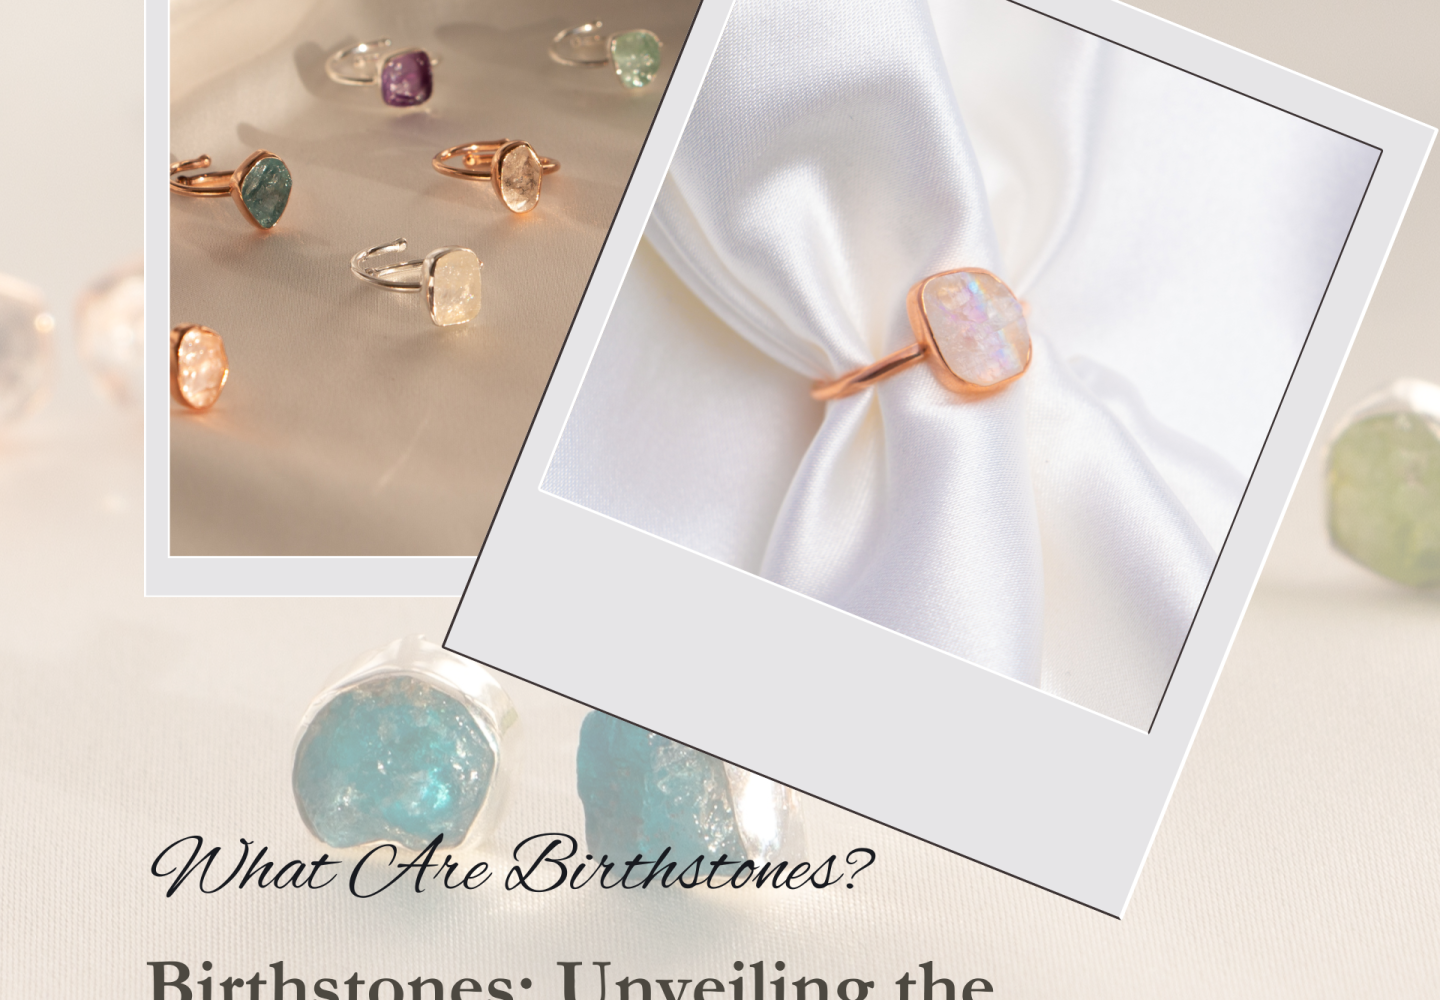 Birthstone Jewellery